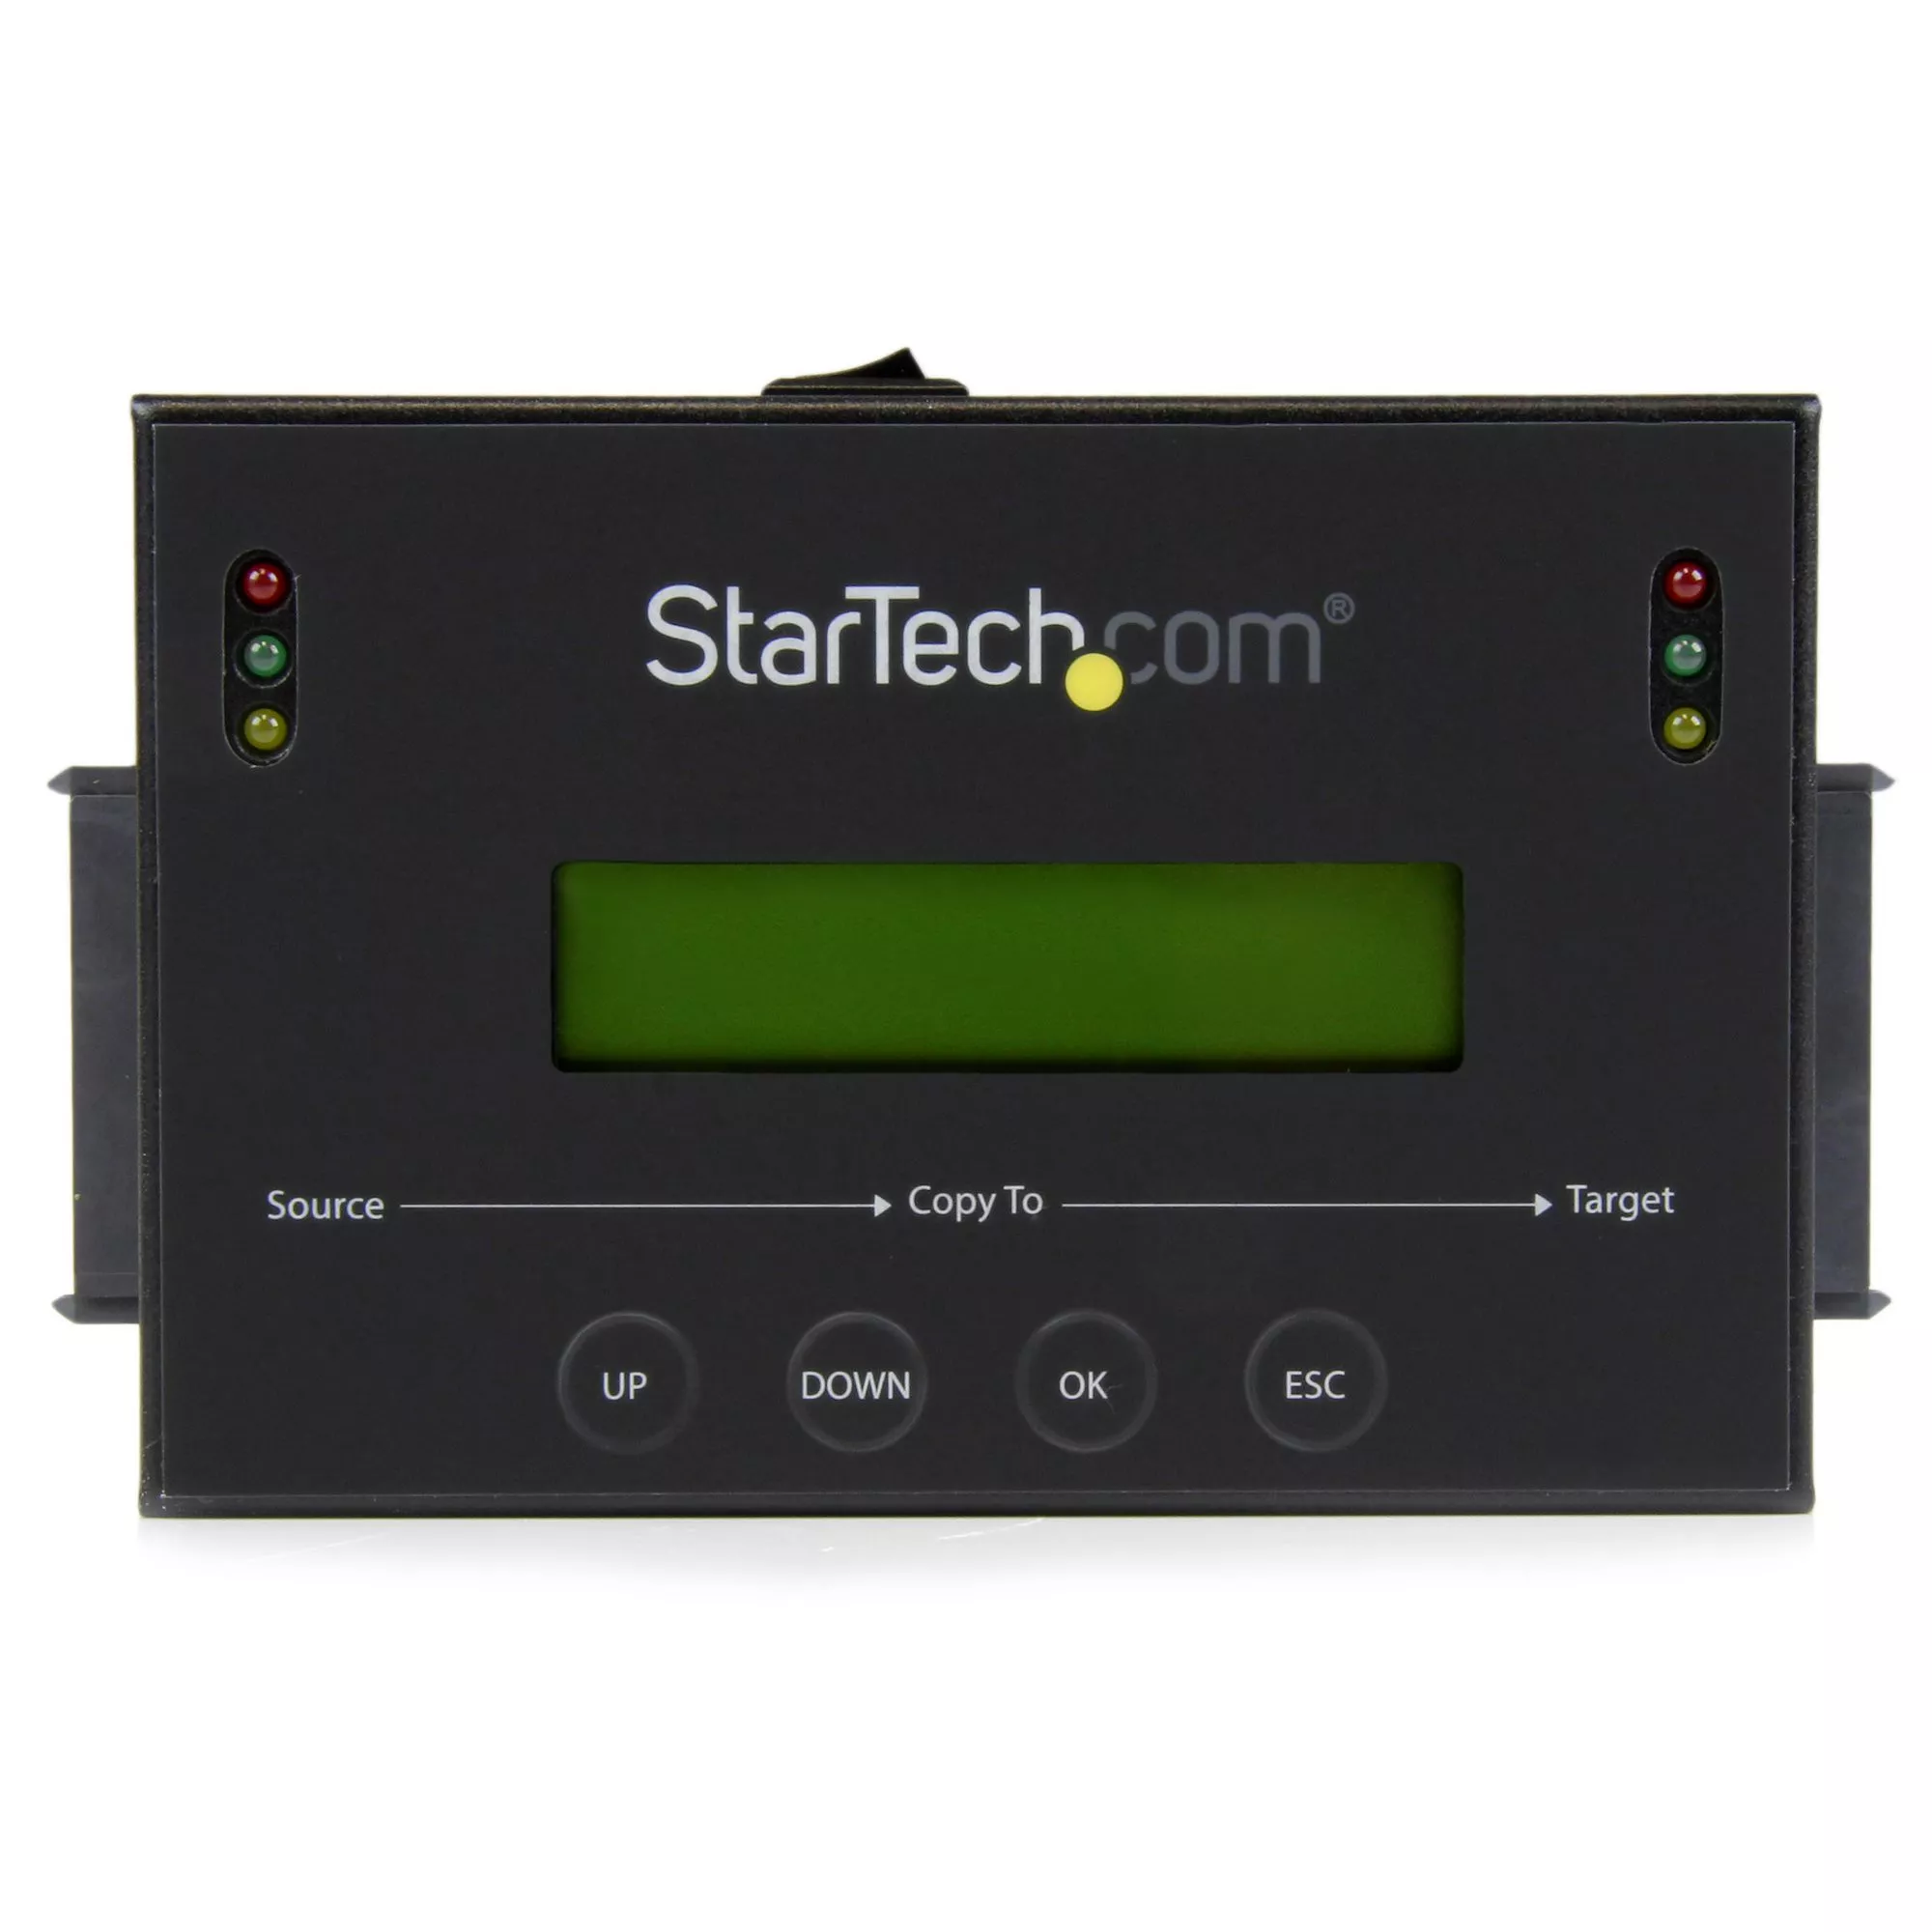 Vente StarTech.com Duplicateur de Disque Dur Autonome 1:1 avec StarTech.com au meilleur prix - visuel 2